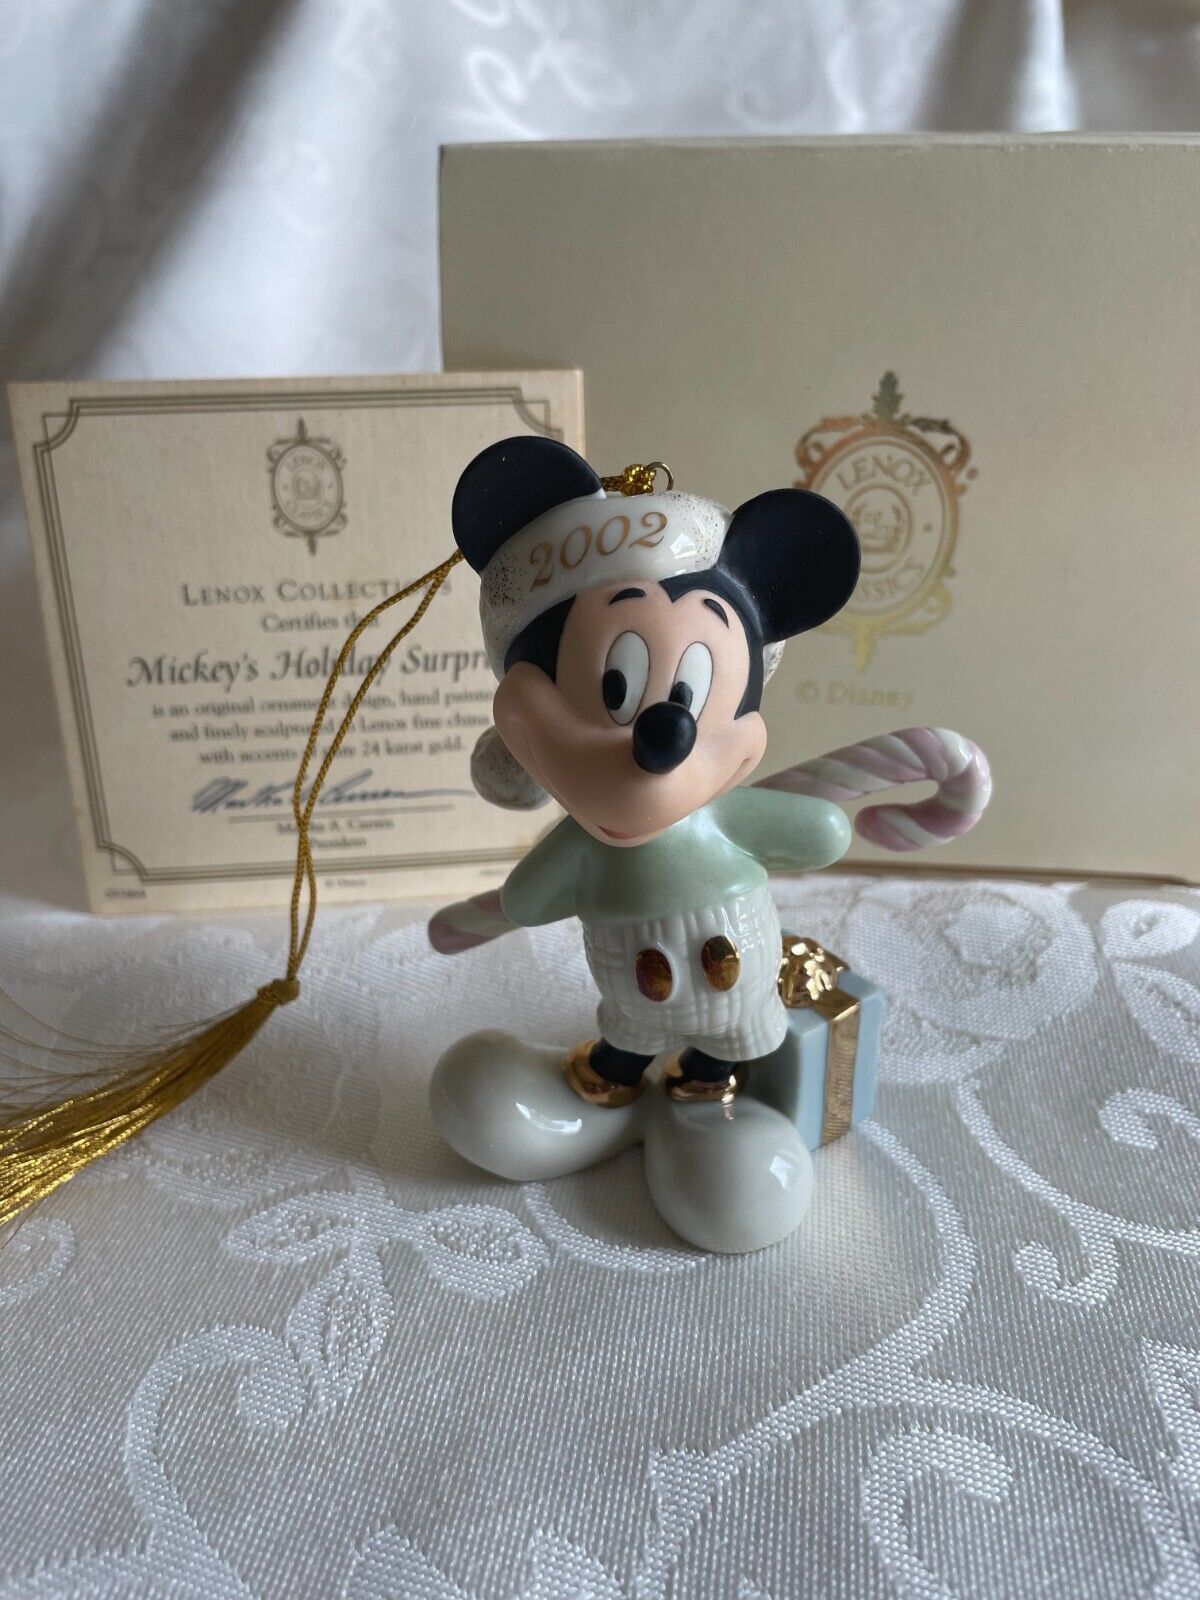 Lenox Classics Disney Mickey Mouse “Holiday Surprise” ~ 2002 With Box ~ COA~